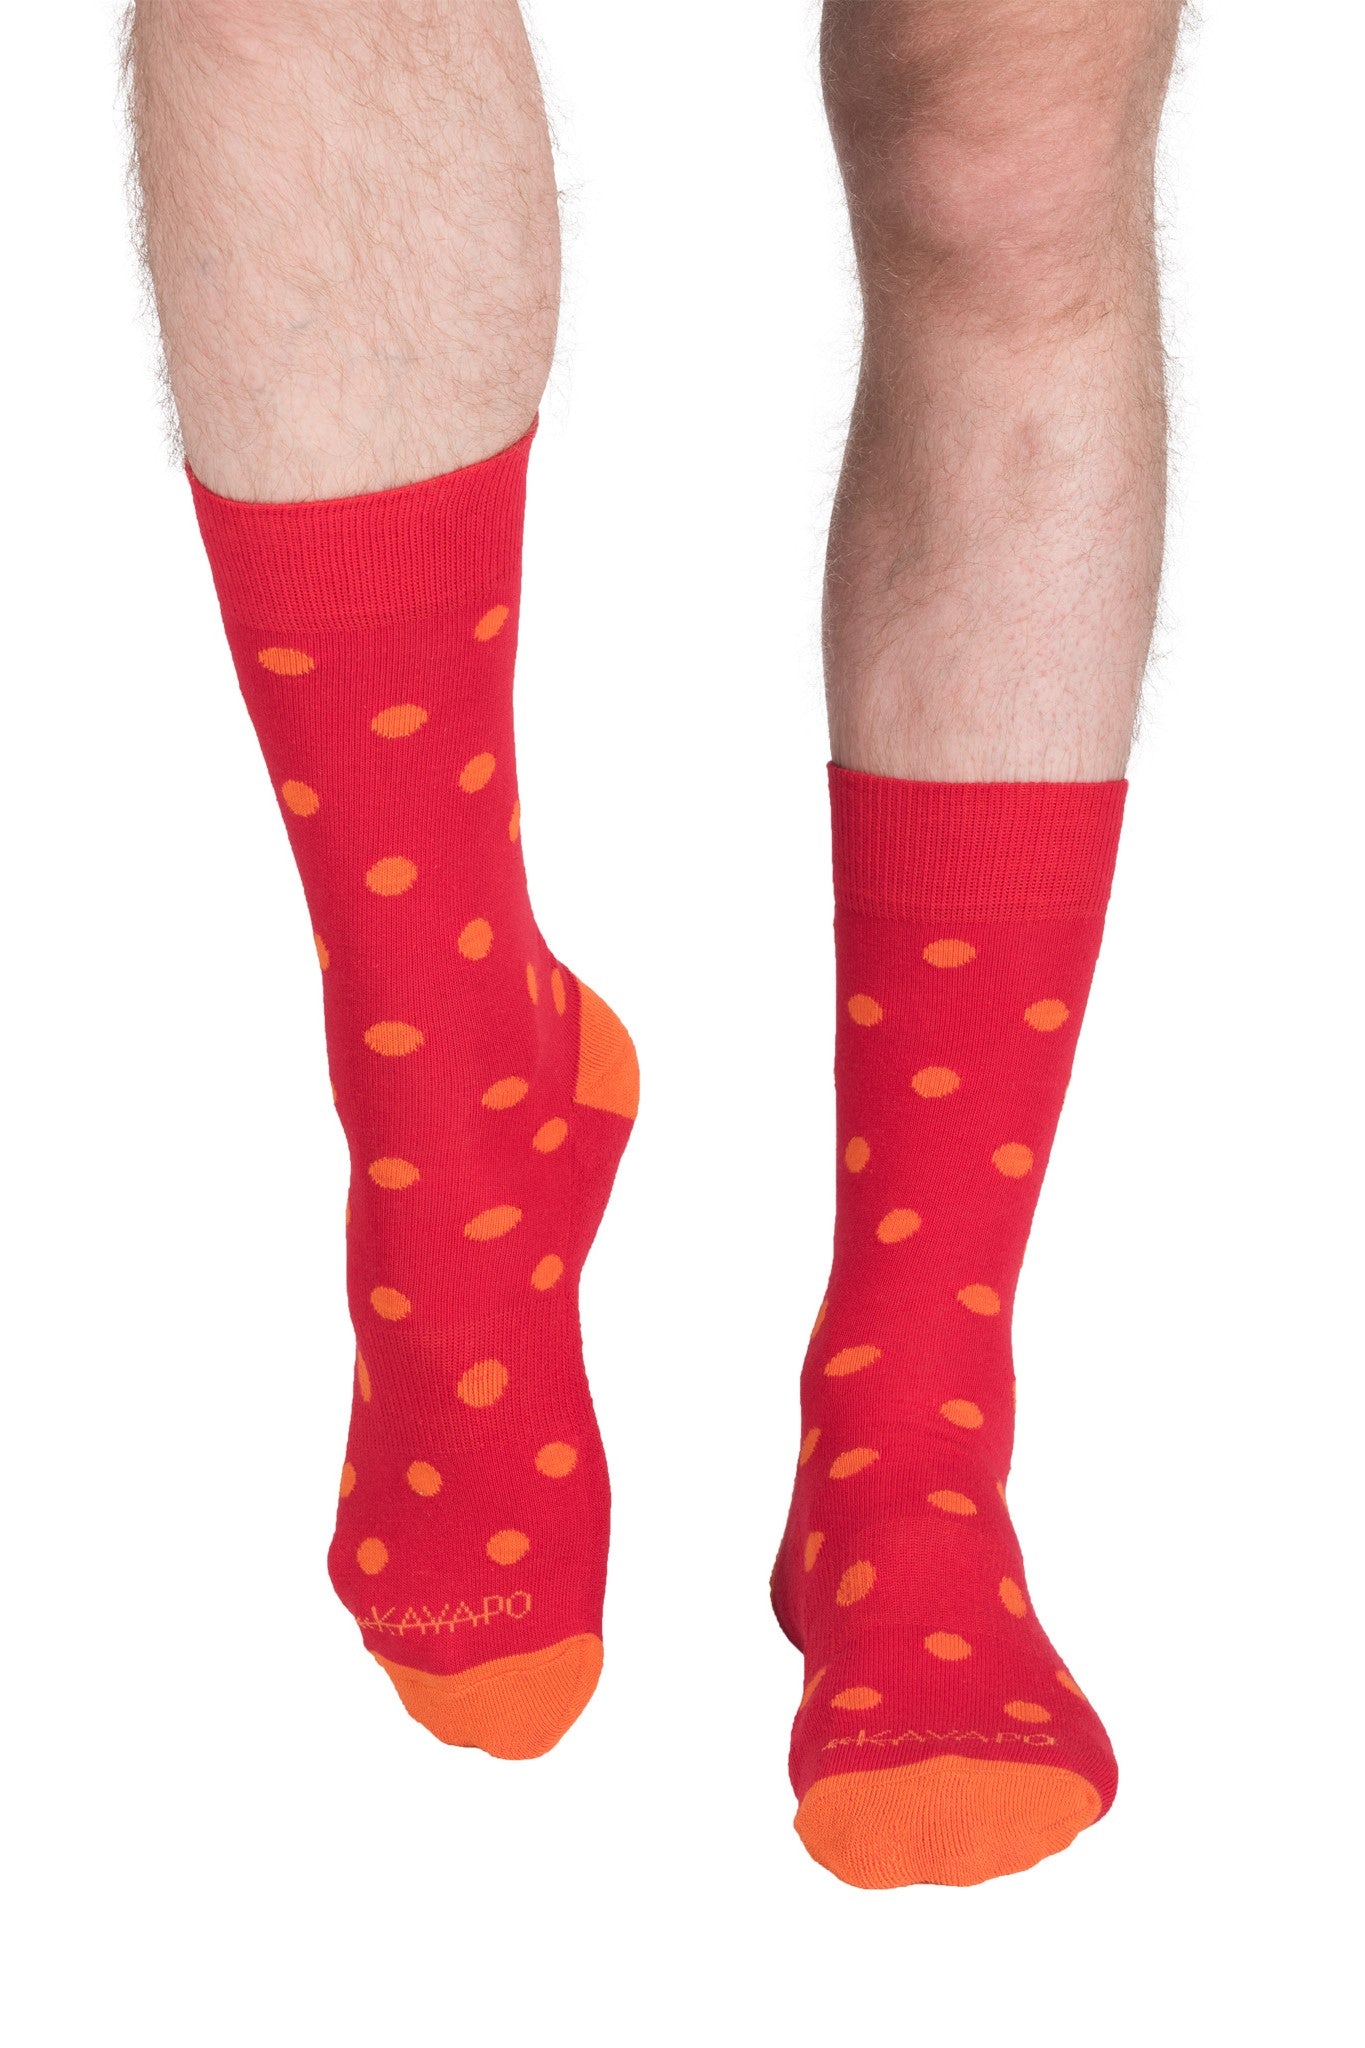 Kayapo Men's Crew Socks